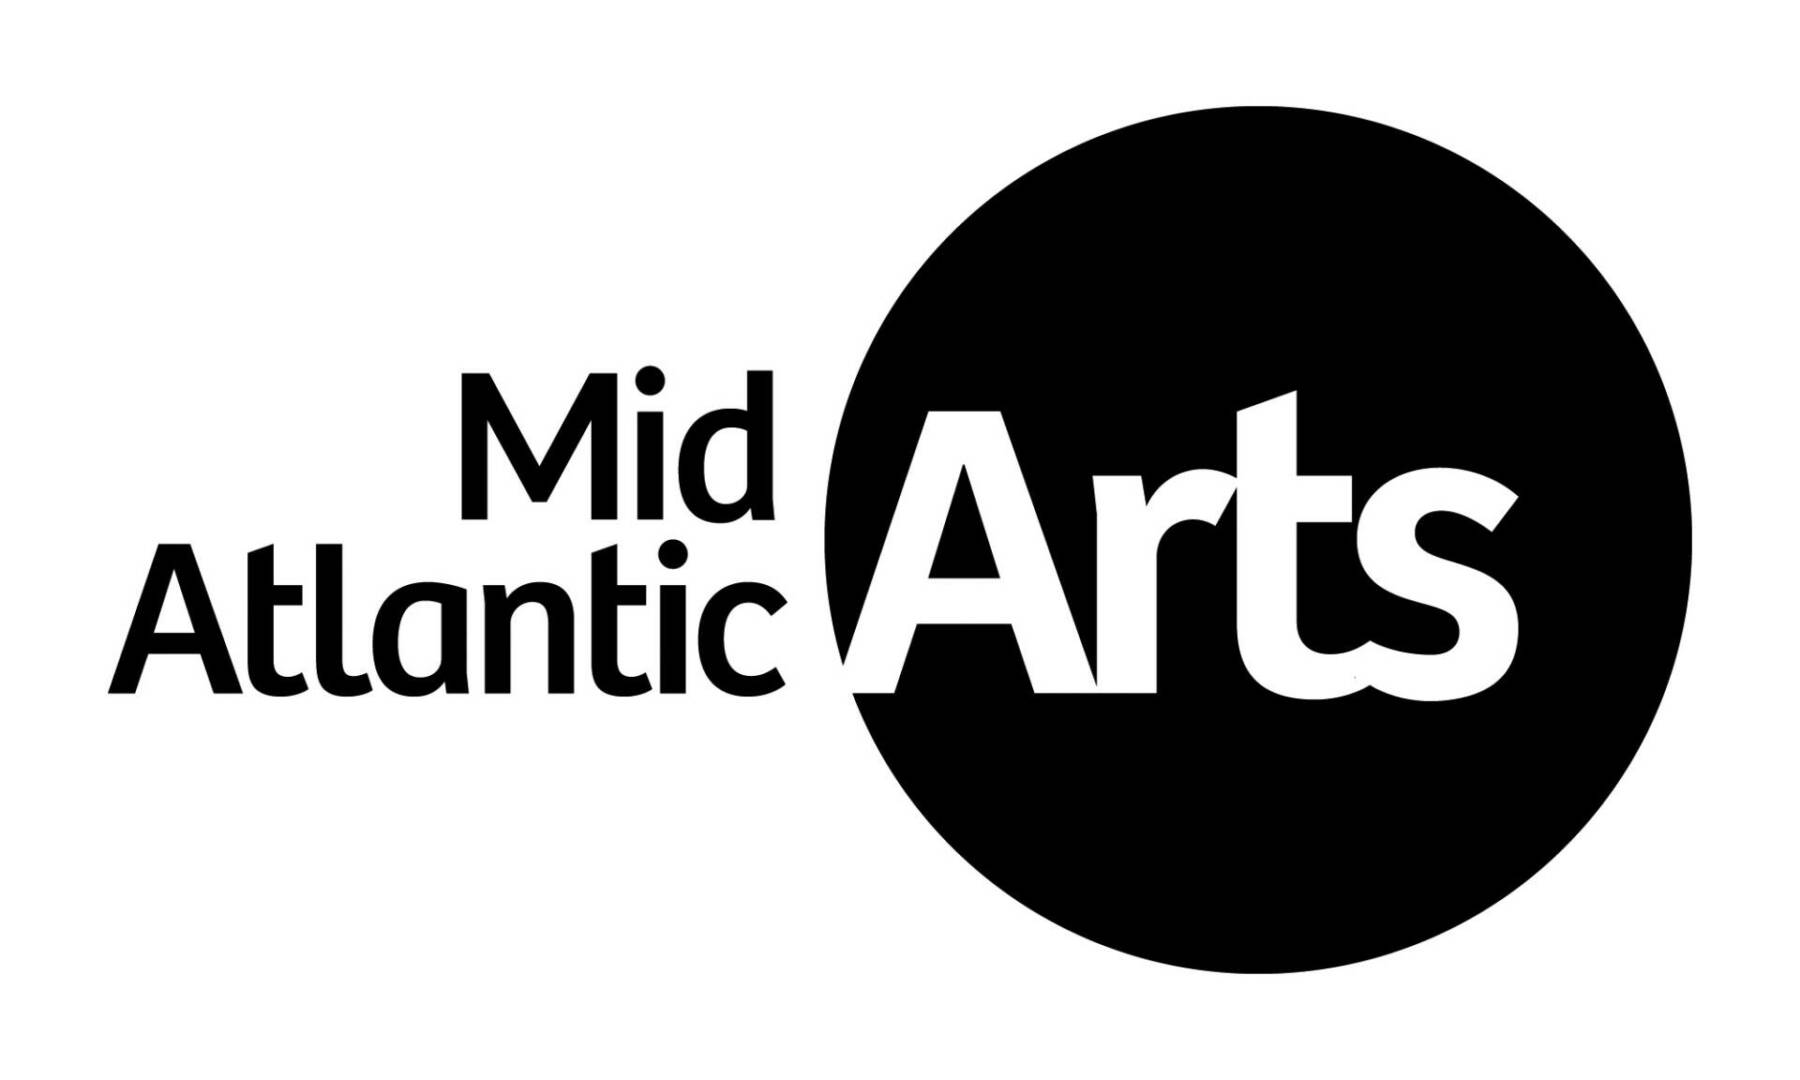 mid atlantic arts logo black